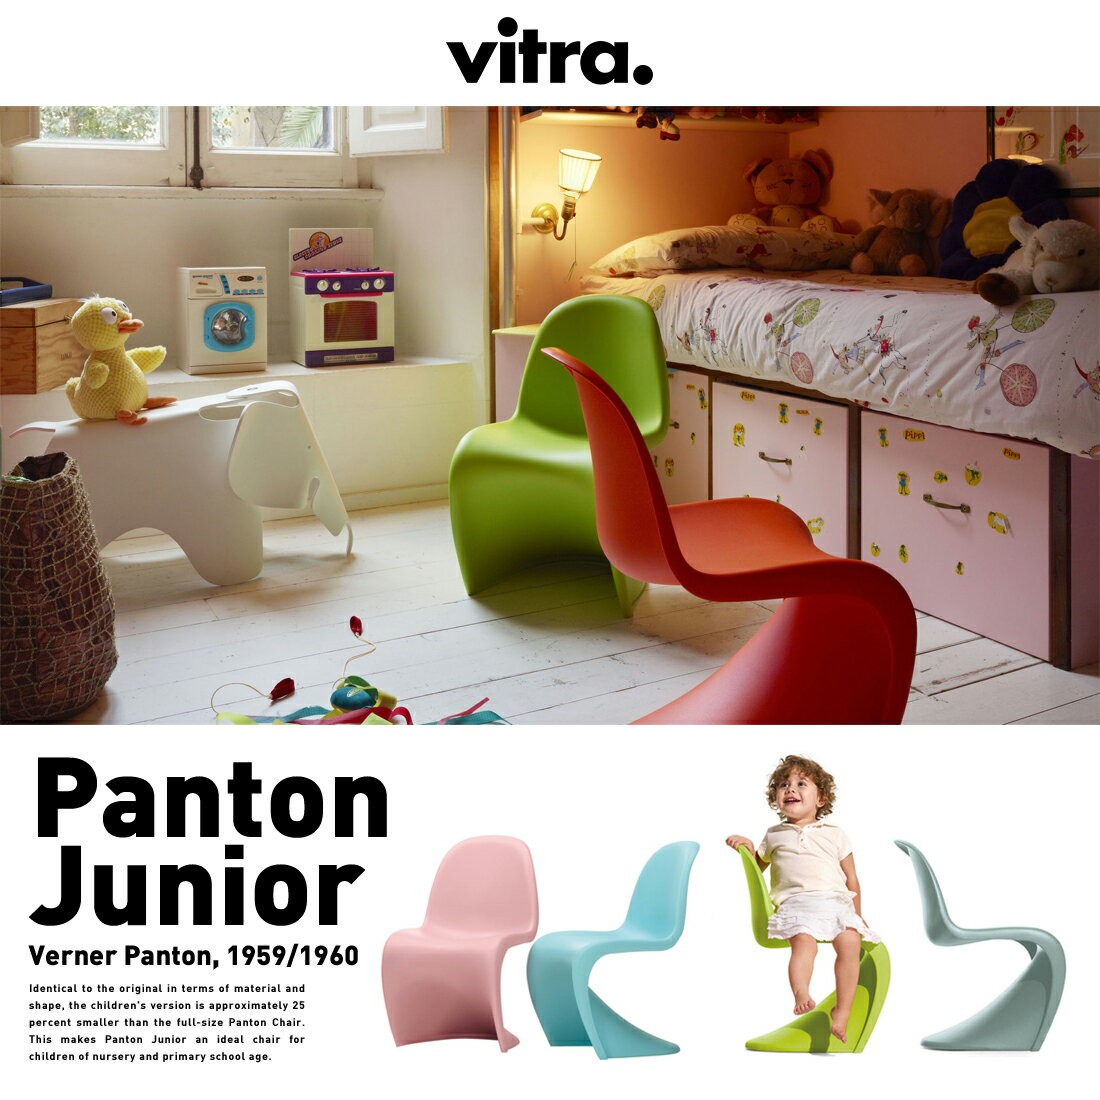 Vitra ヴィトラ Panton Junior パントンジュニア ヴィトラ ヴェルナー